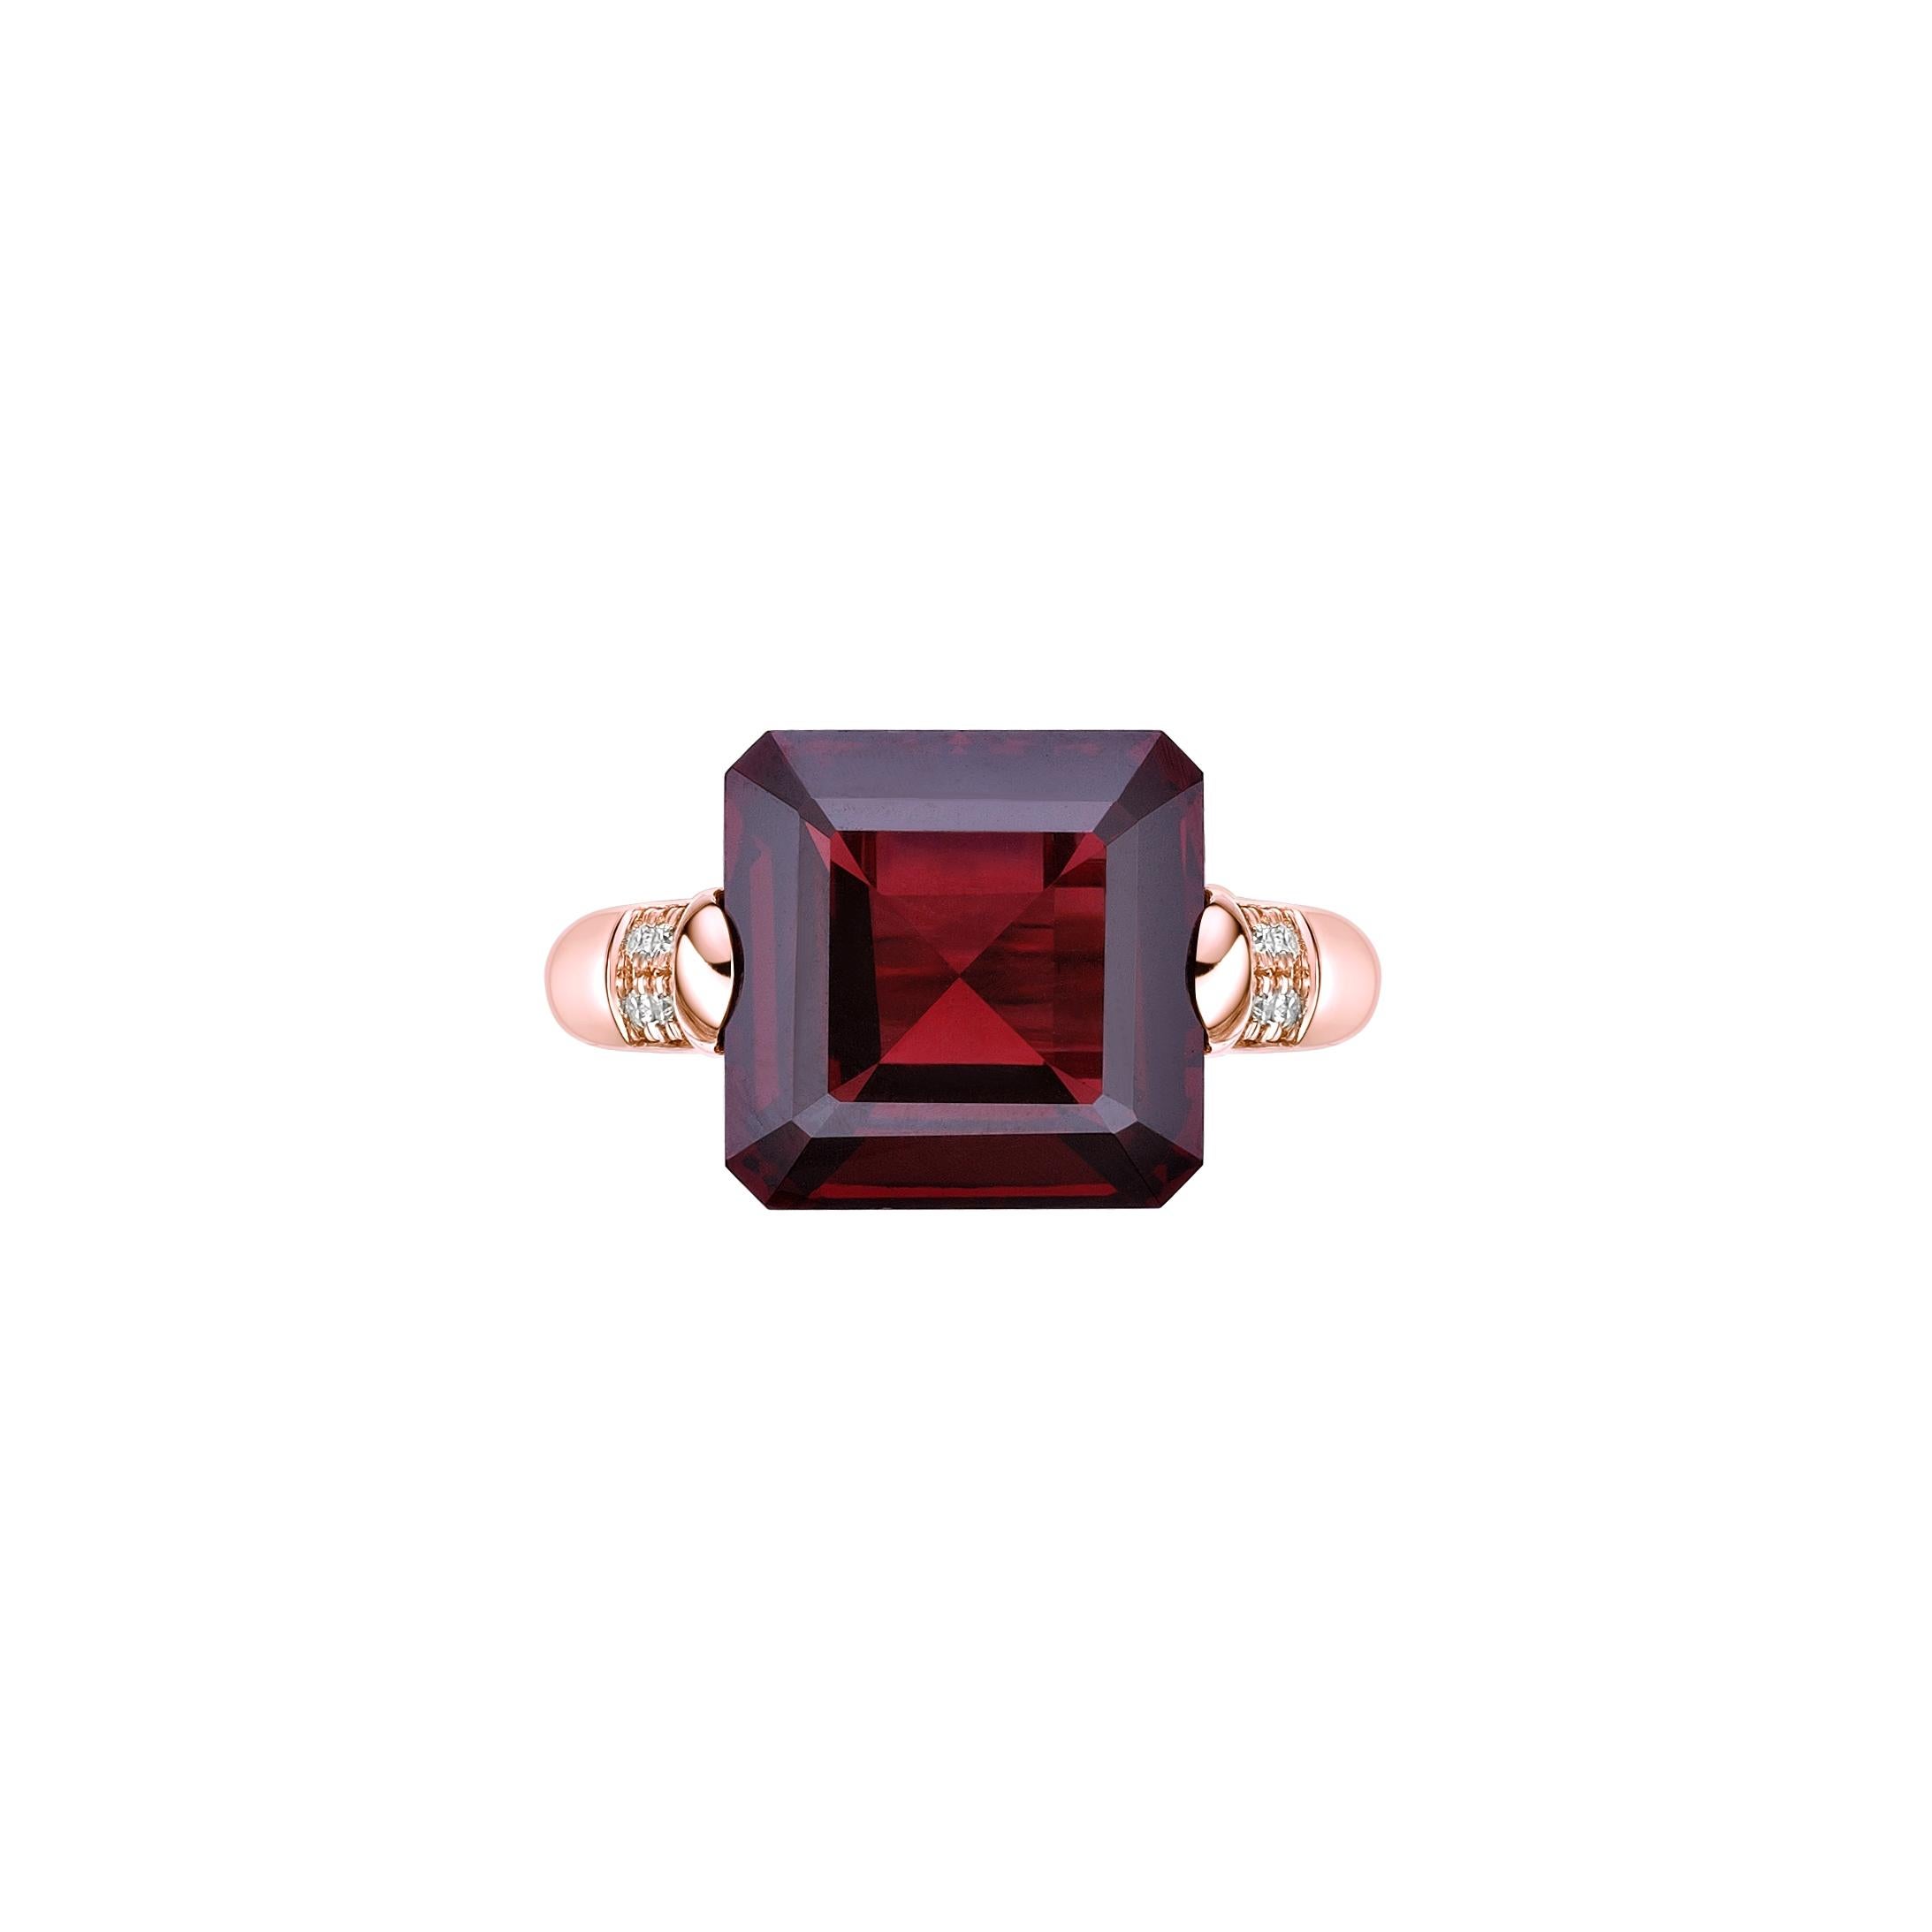 Octagon Cut 11.15 Carat Red Garnet Fancy Ring in 18Karat Rose Gold with White Diamond. For Sale